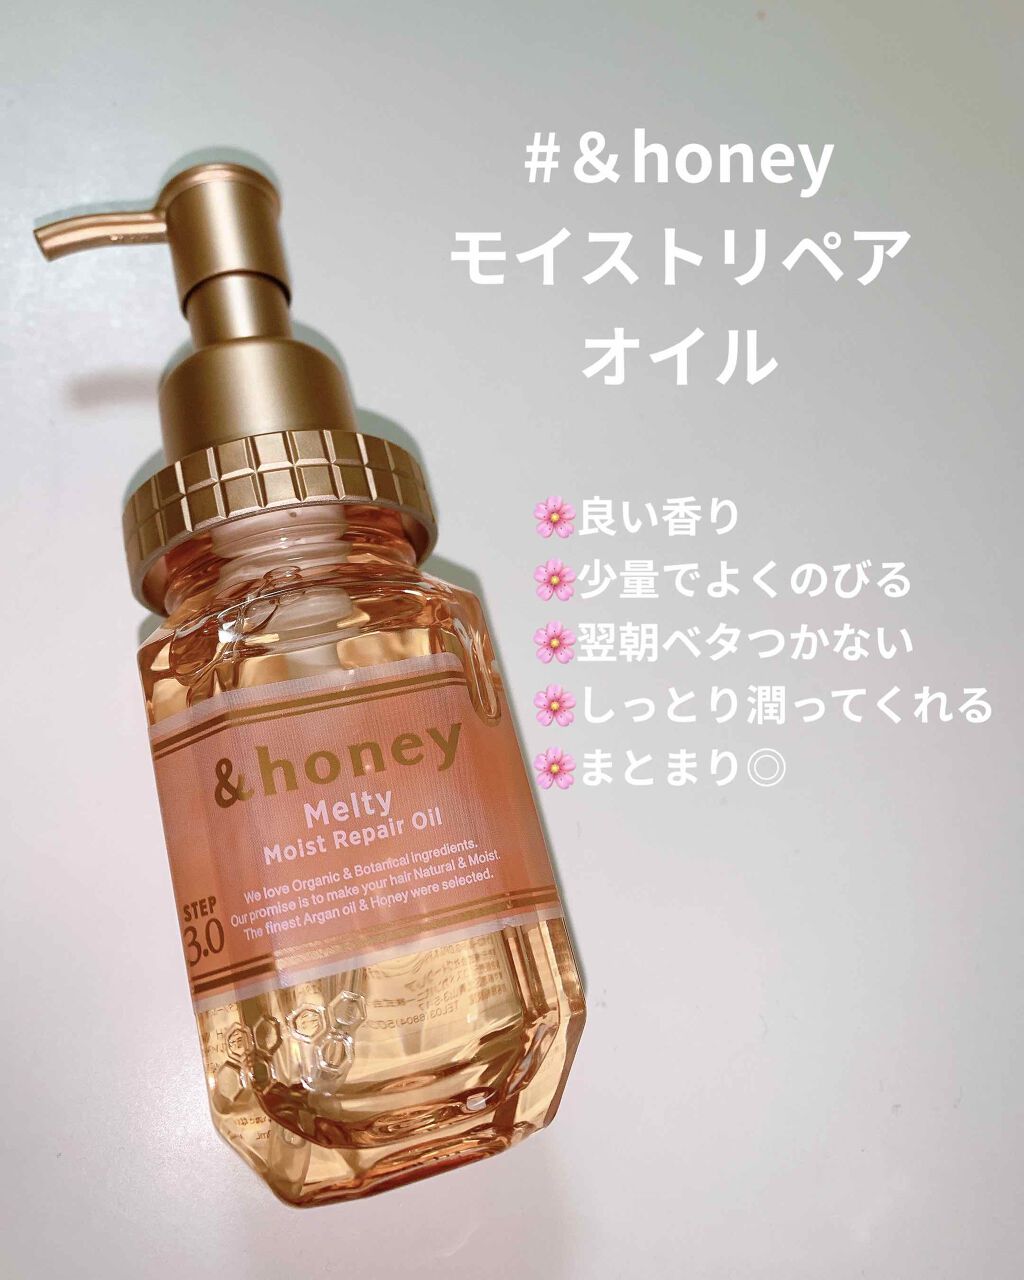 &honey Melty モイストリペア ヘアオイル 3.0｜&honeyの口コミ 